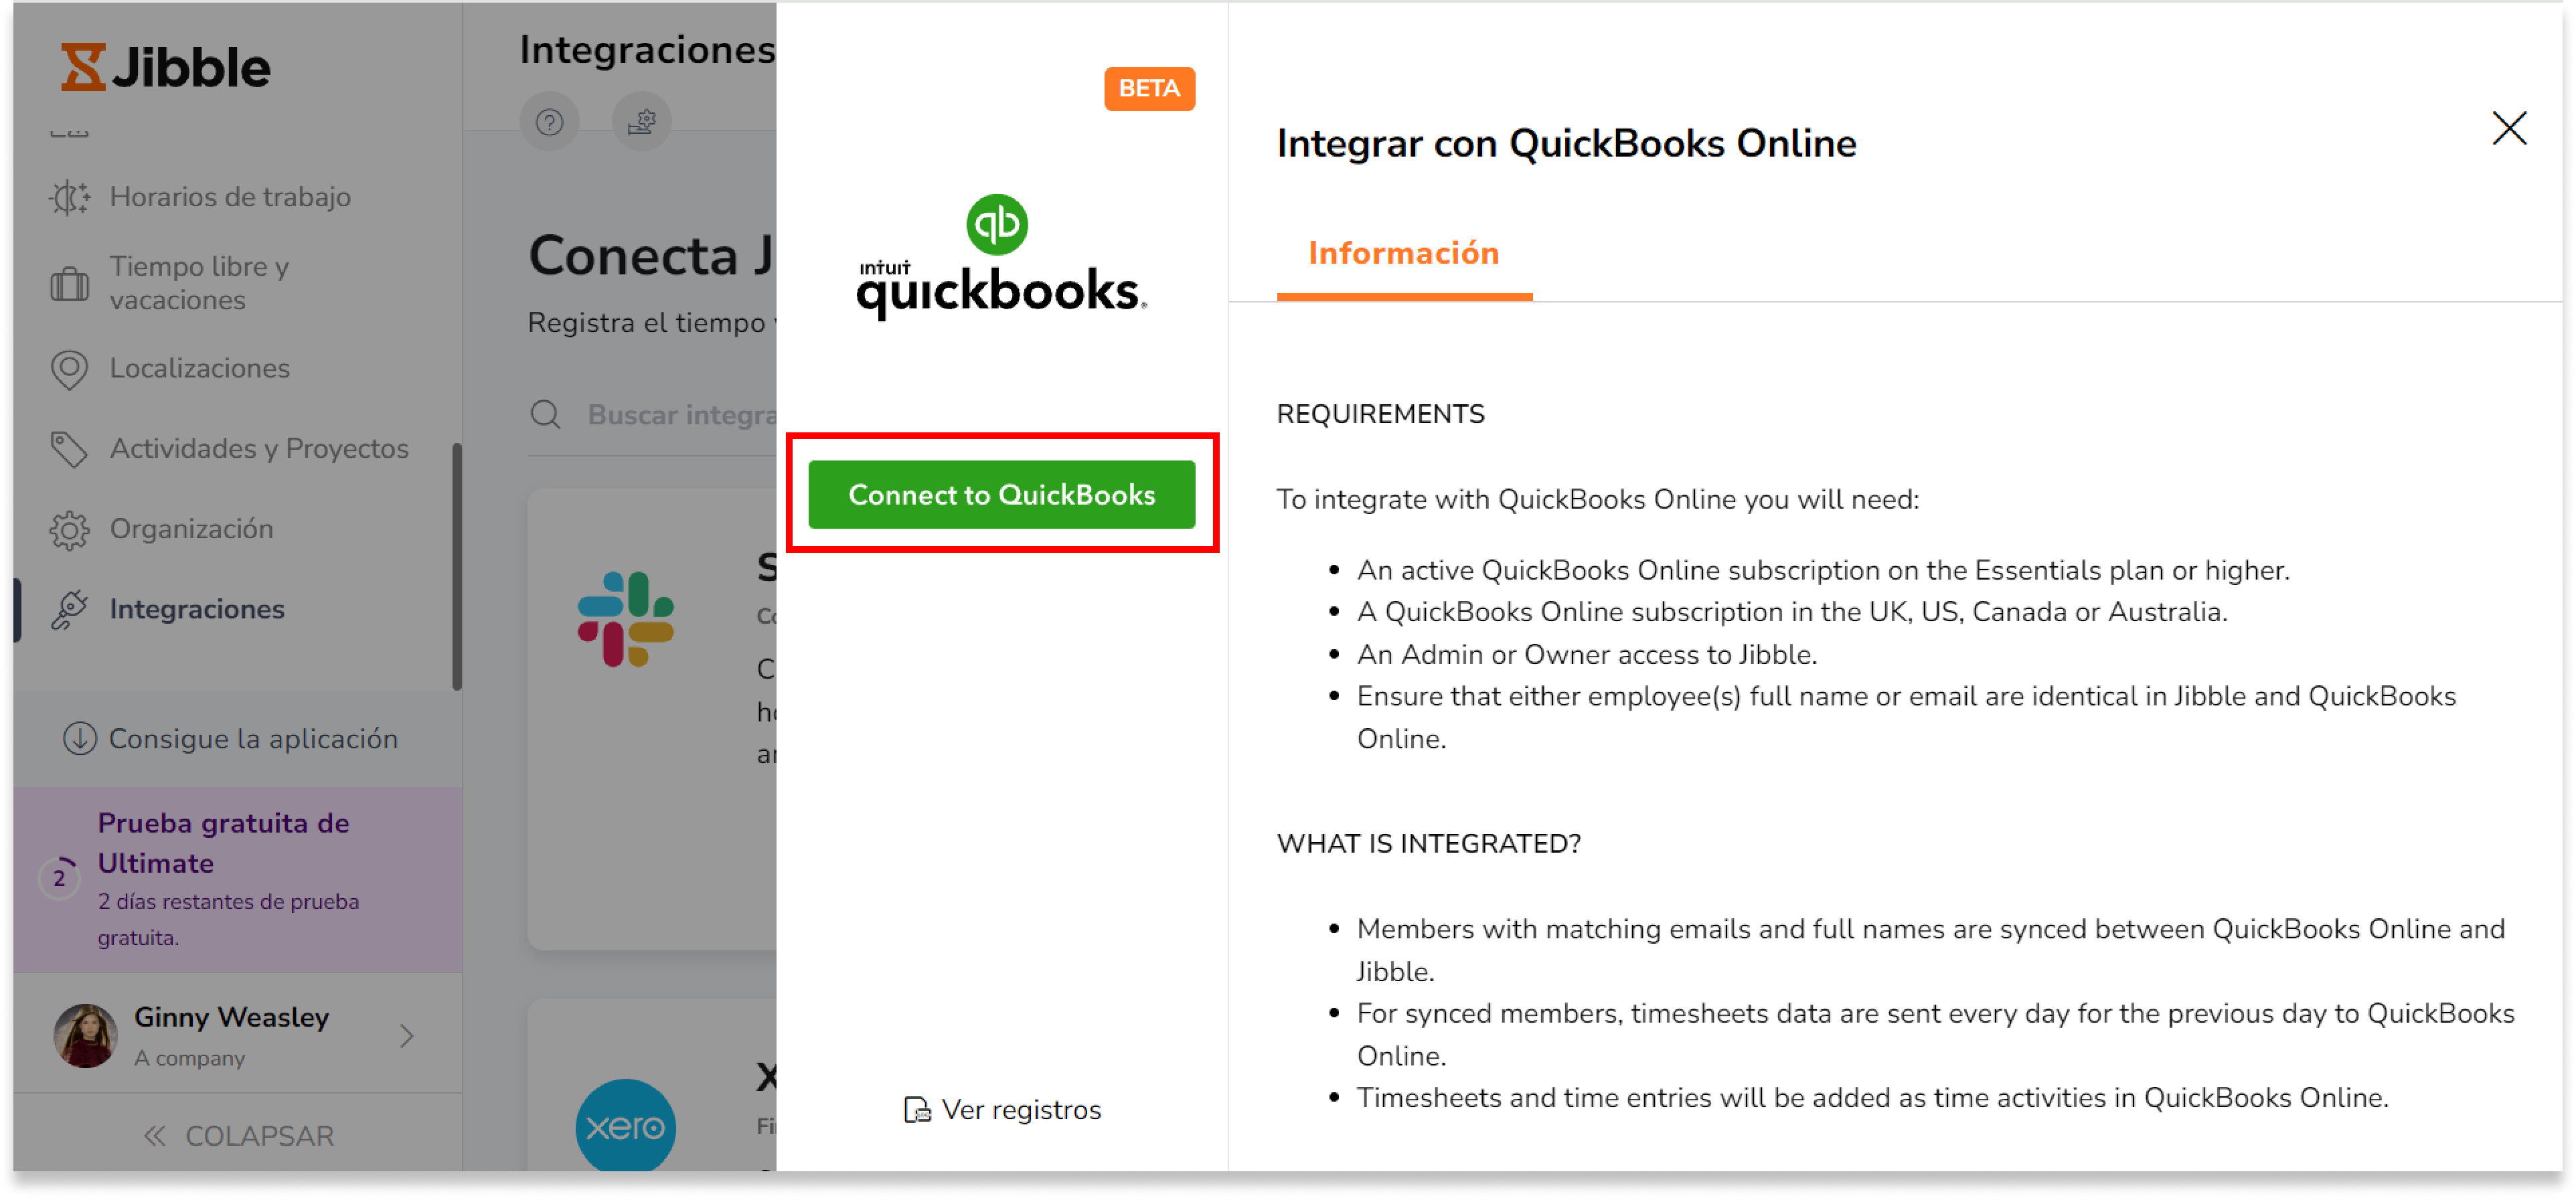 Verás un modulo que se integra con QuickBooks Online. Haz clic en "Conectar con QuickBooks".